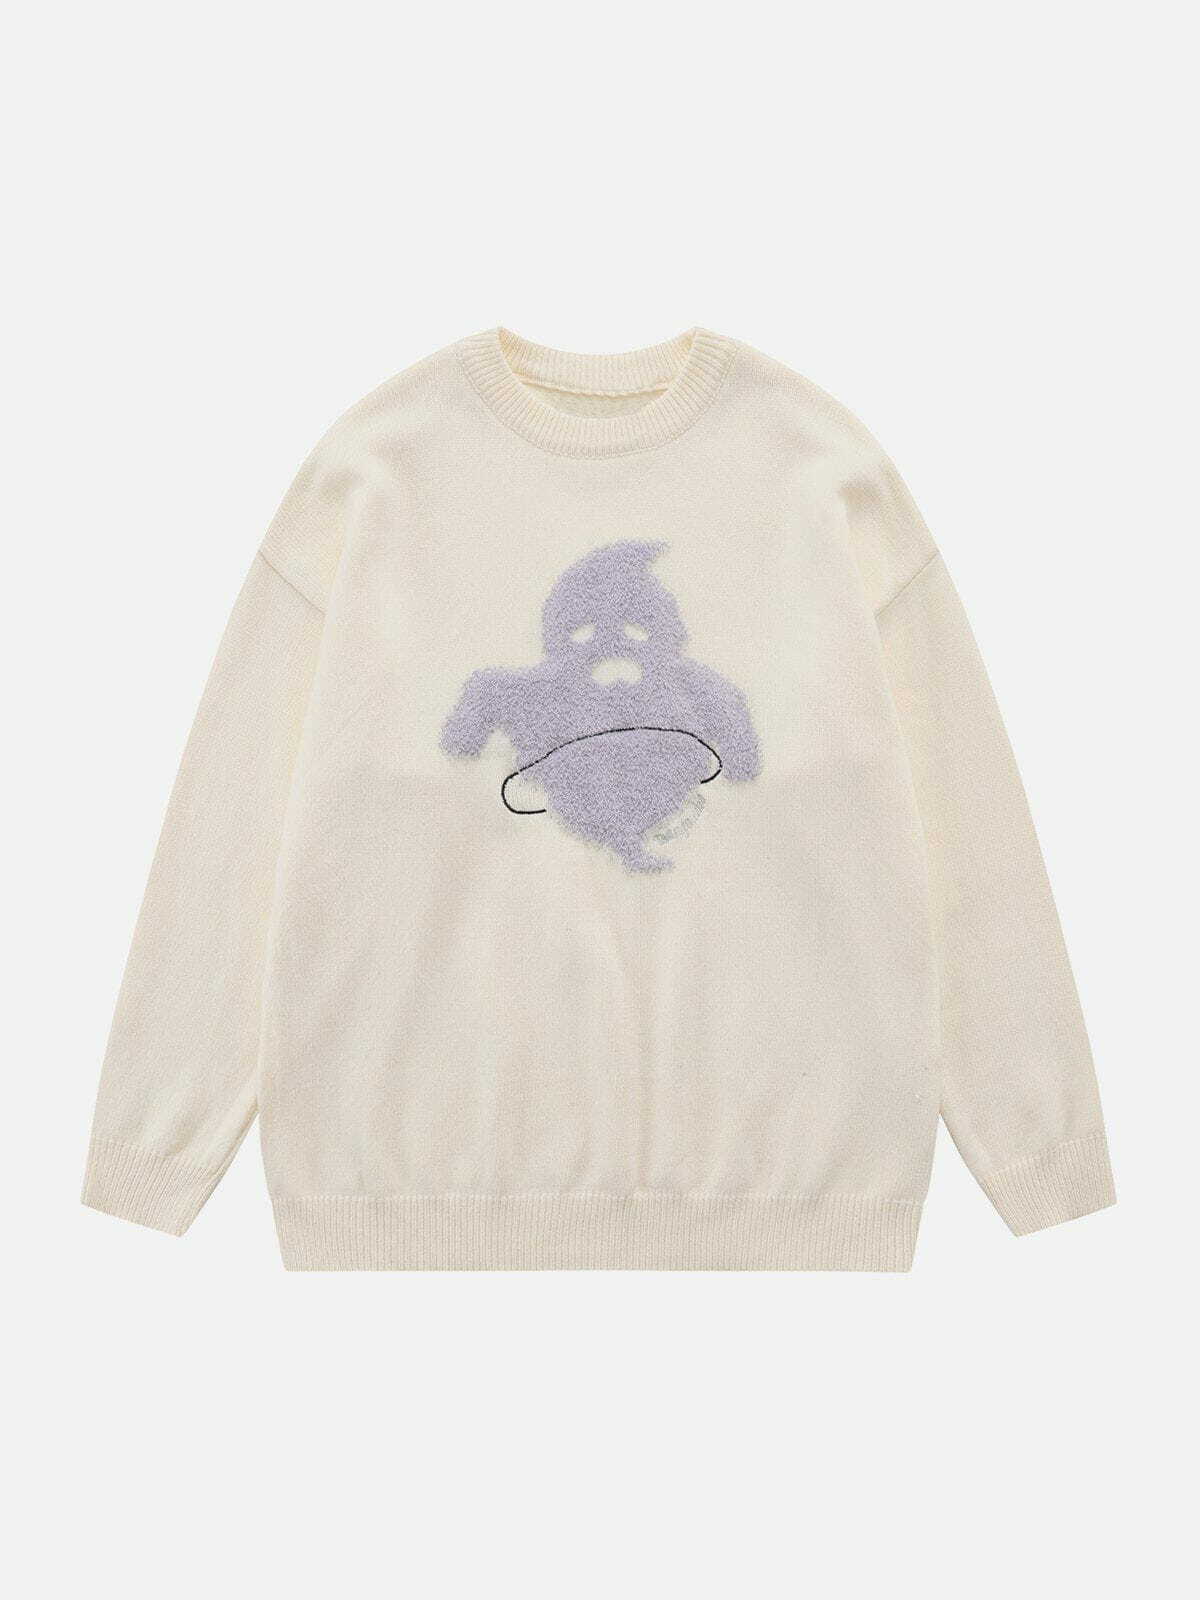 flocked ghost sweater edgy y2k streetwear charm 8977